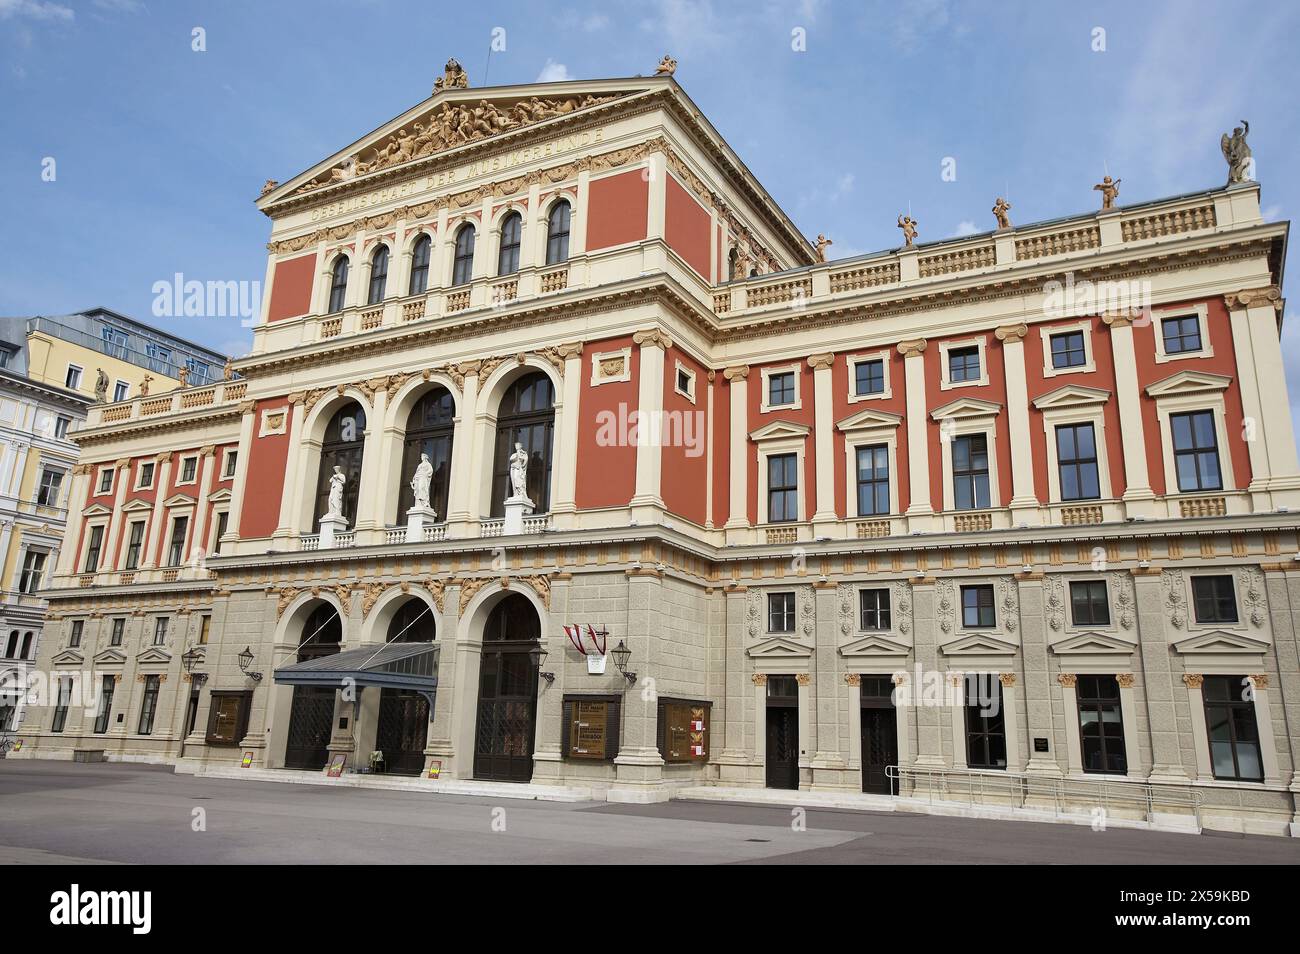 Musikverein concert hall built by the Gesellschaft der Musikfreunde (Society of Friends of Music), Vienna. Austria Stock Photo